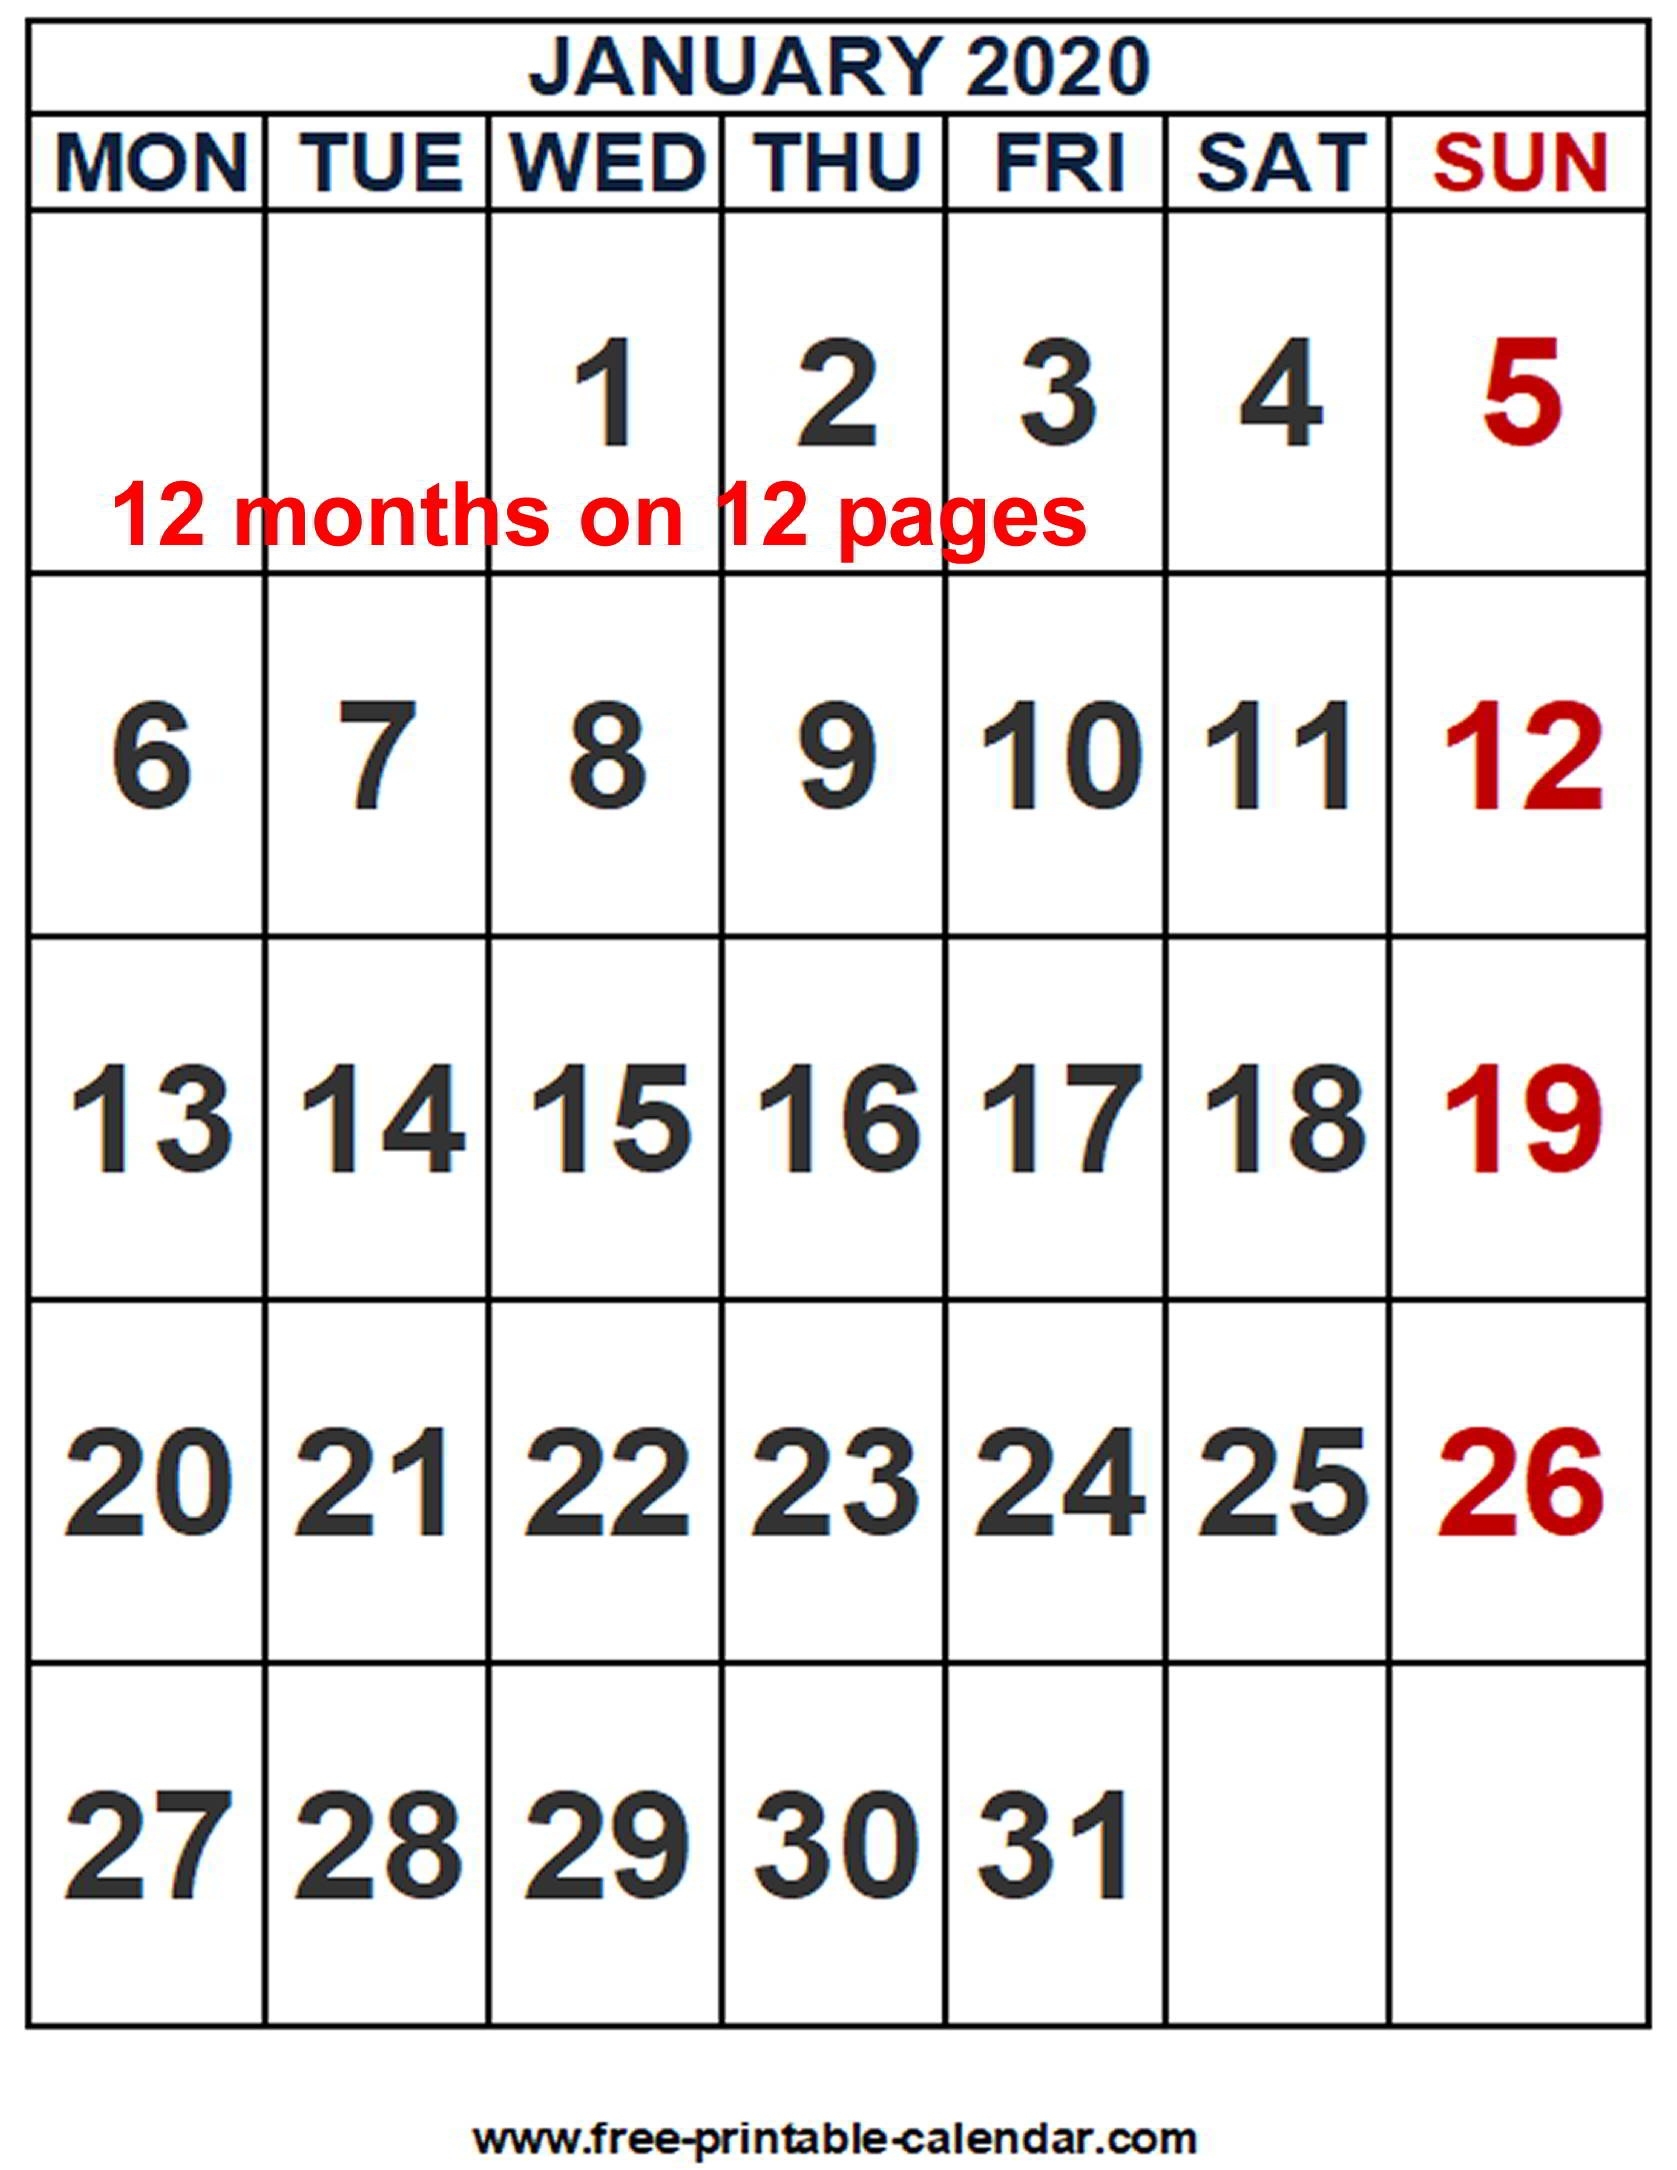 2020 Calendar Word Template - Free-Printable-Calendar Microsoft Word Calendar Template 2020